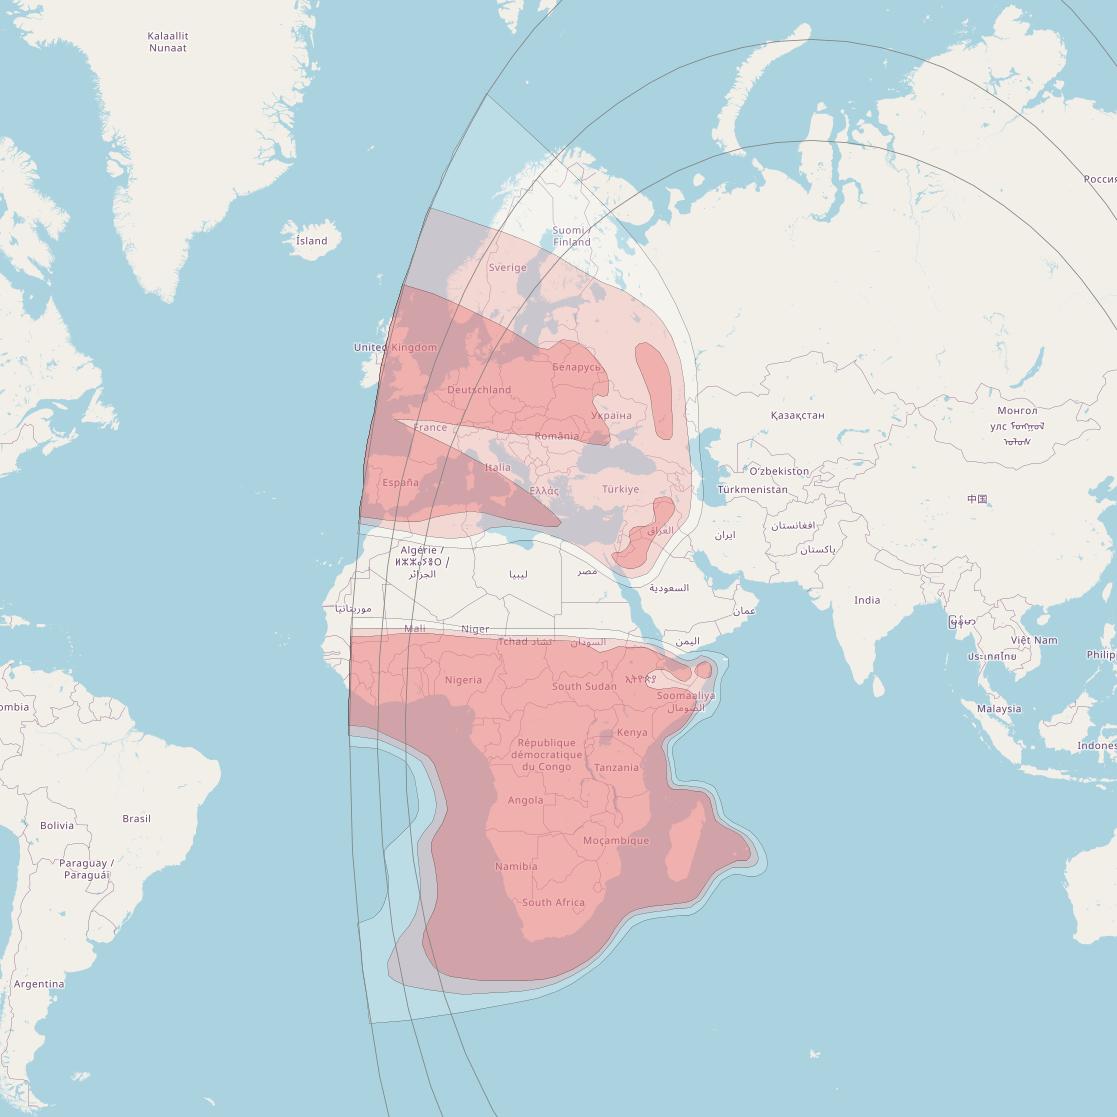 Intelsat 20 at 69° E downlink Ku-band Europe/Africa (EAFKH) beam coverage map